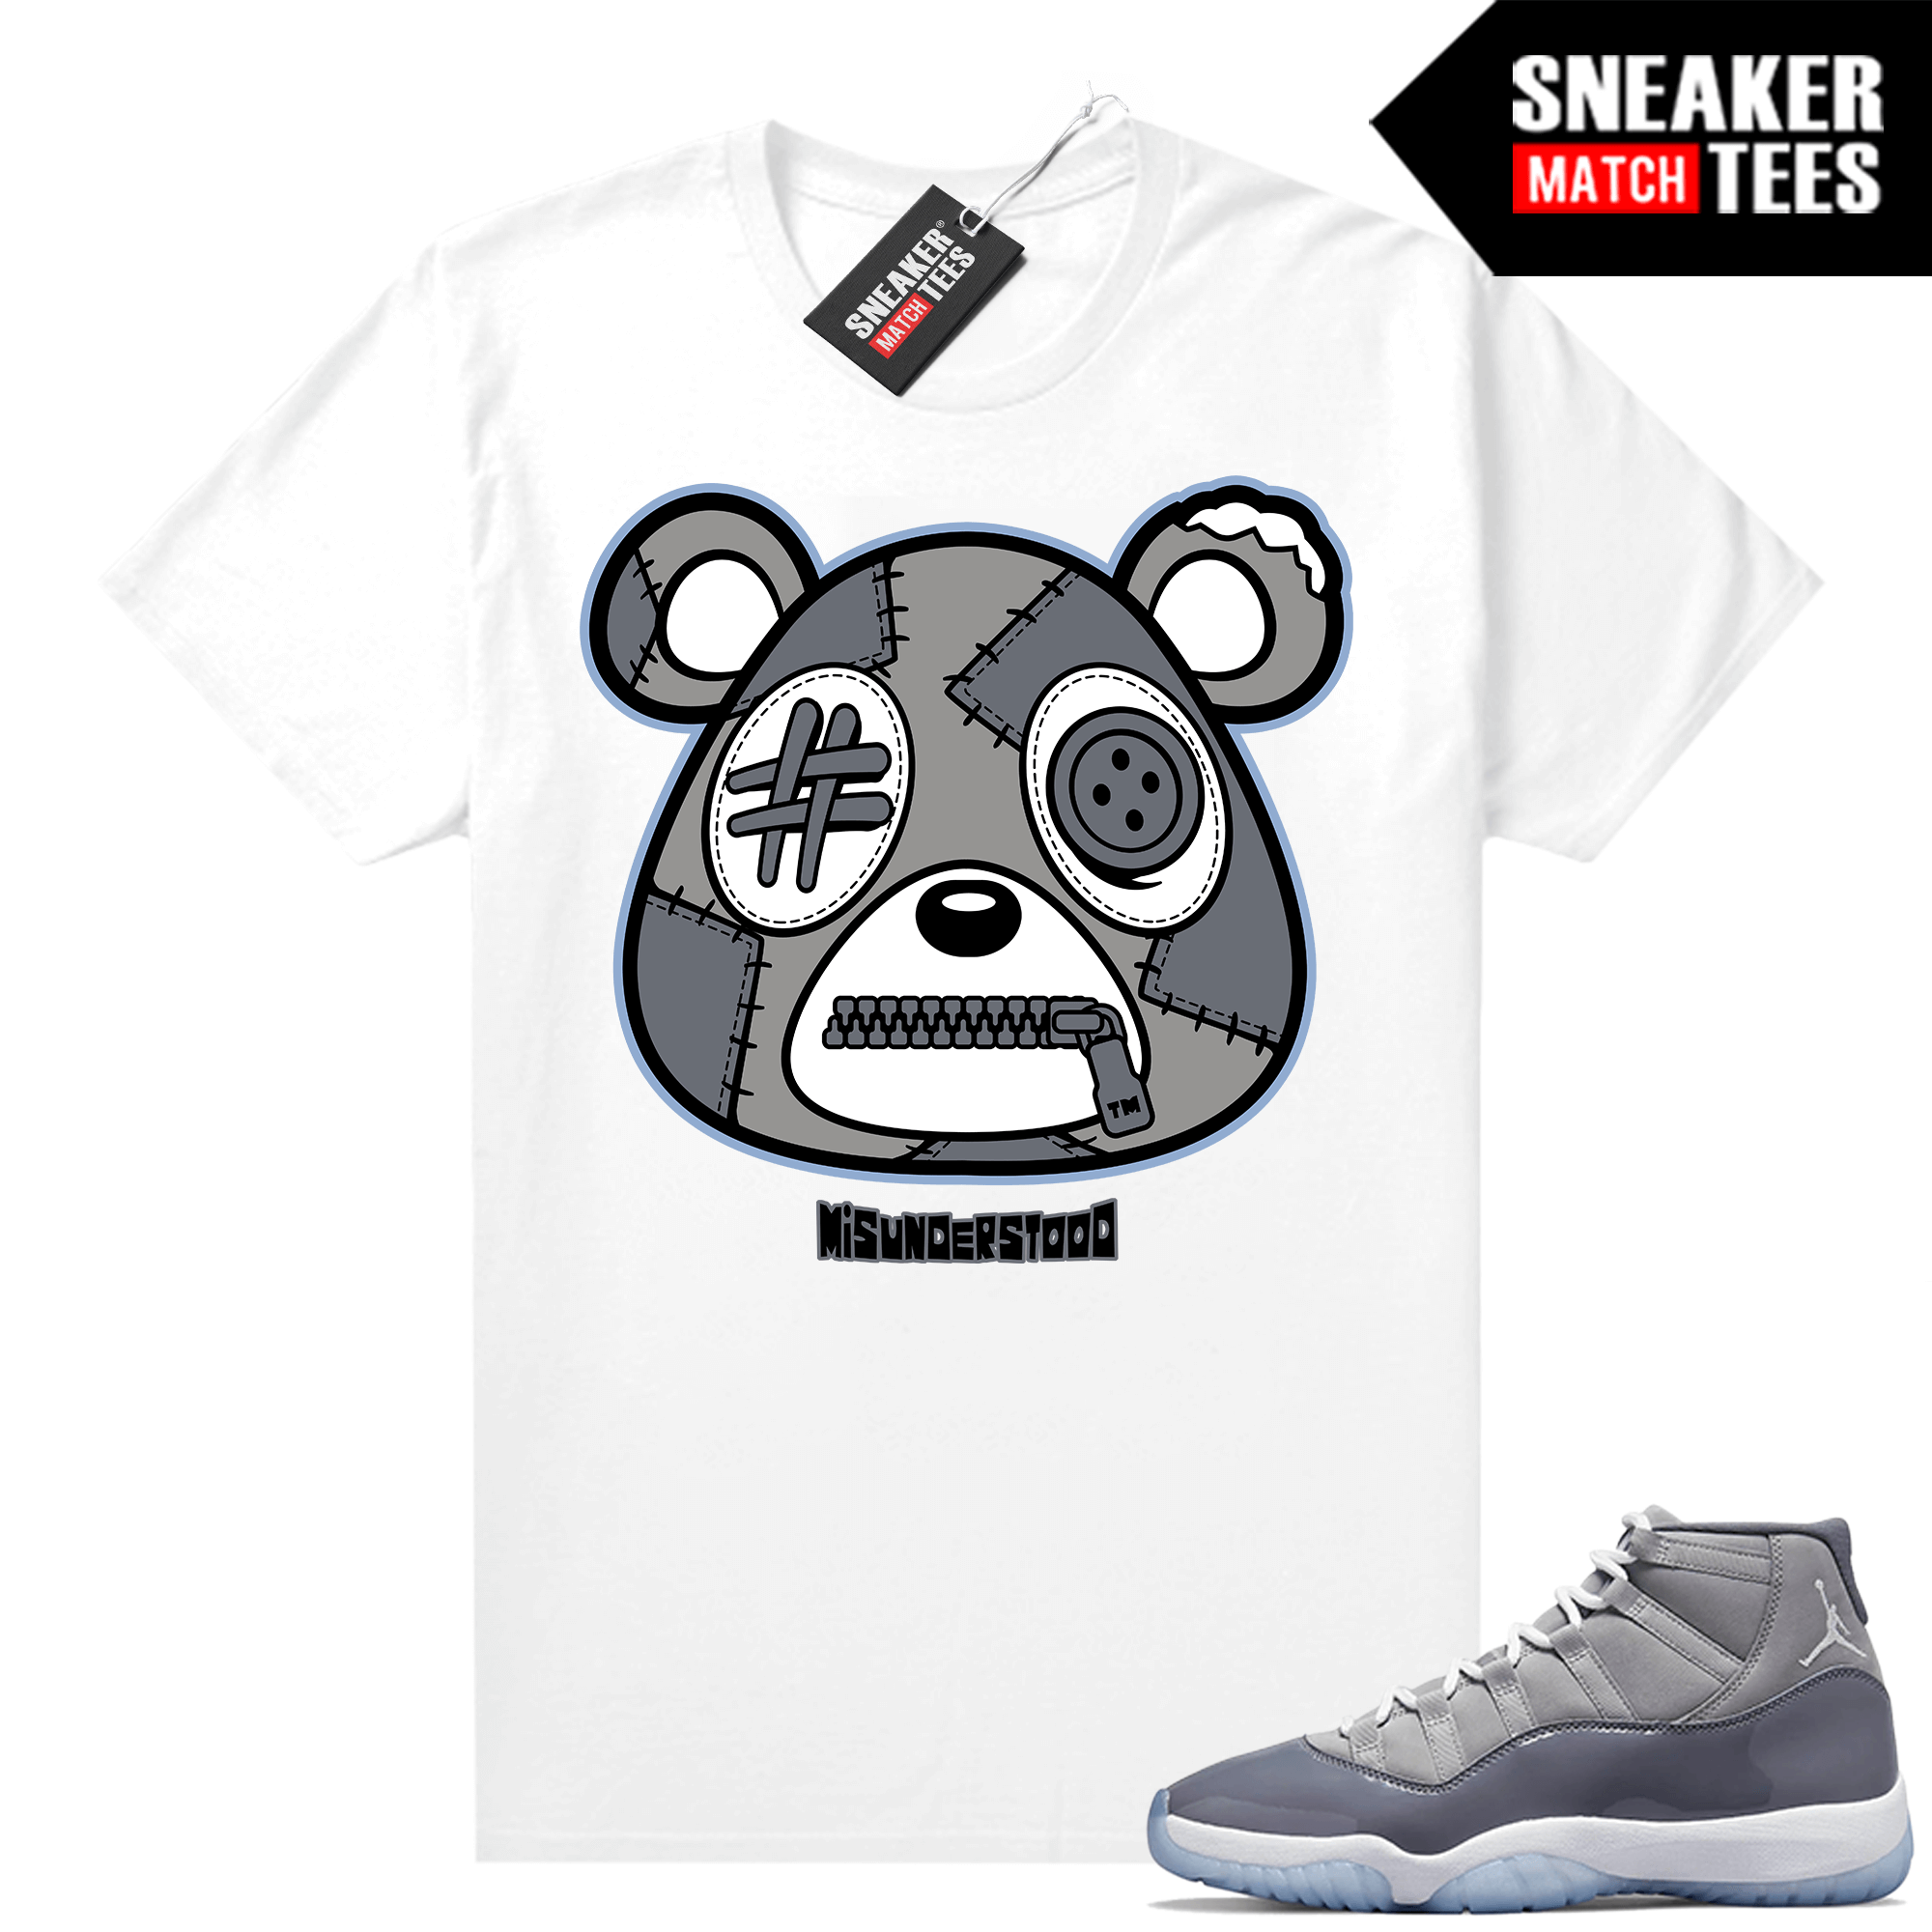 Cool Grey 11 Jordan Urlfreeze Sneakers Sale Online White Misunderstood Bear